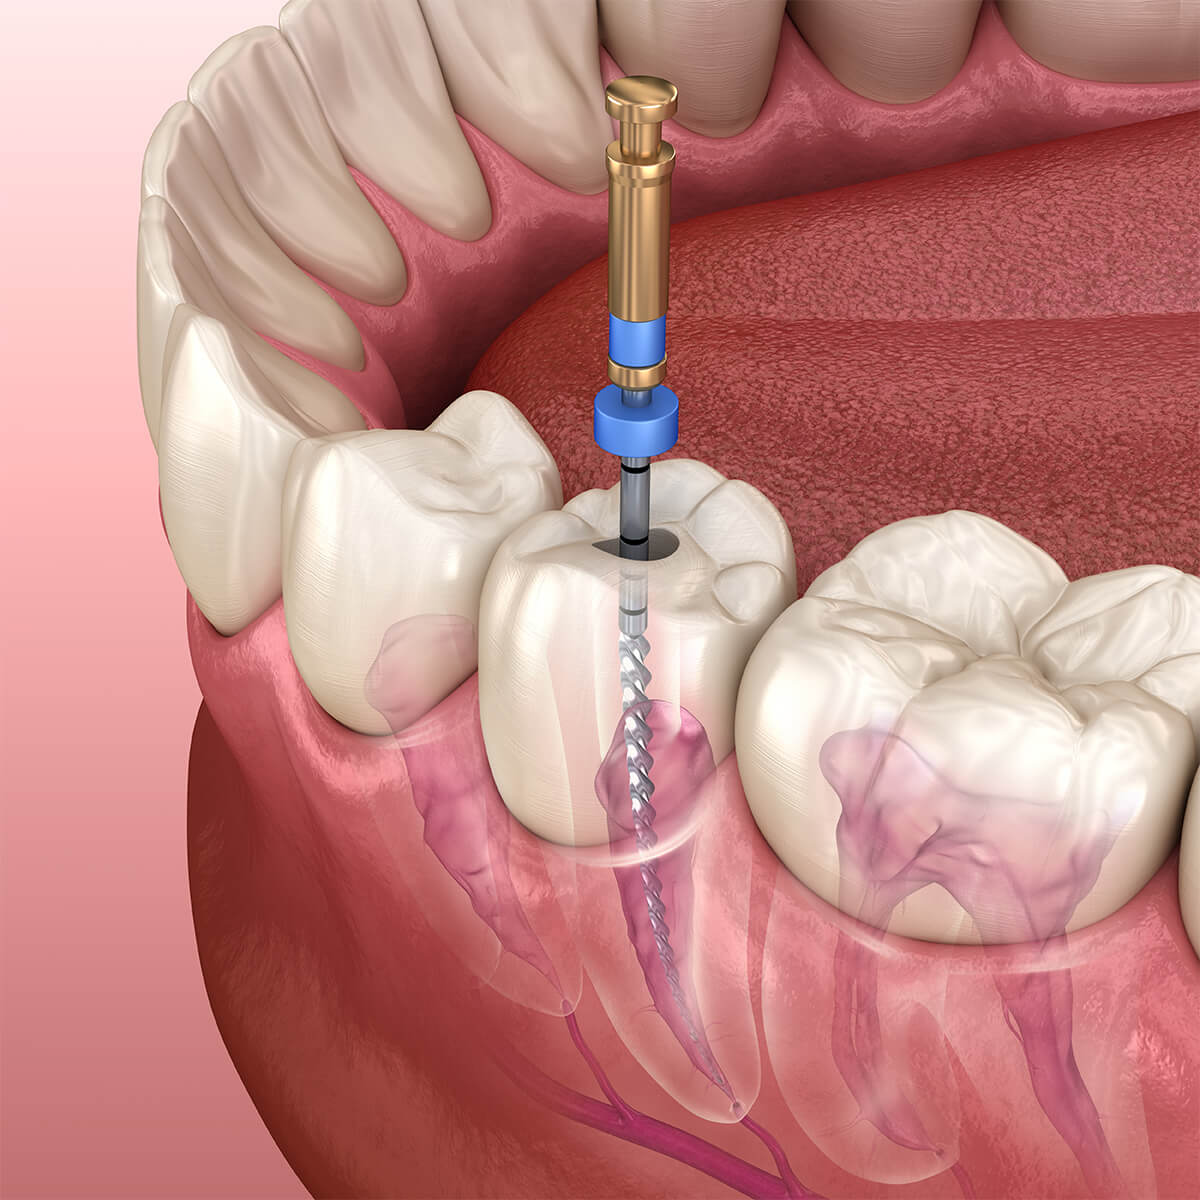 Endodontic Retreatment Service in San Antonio Area